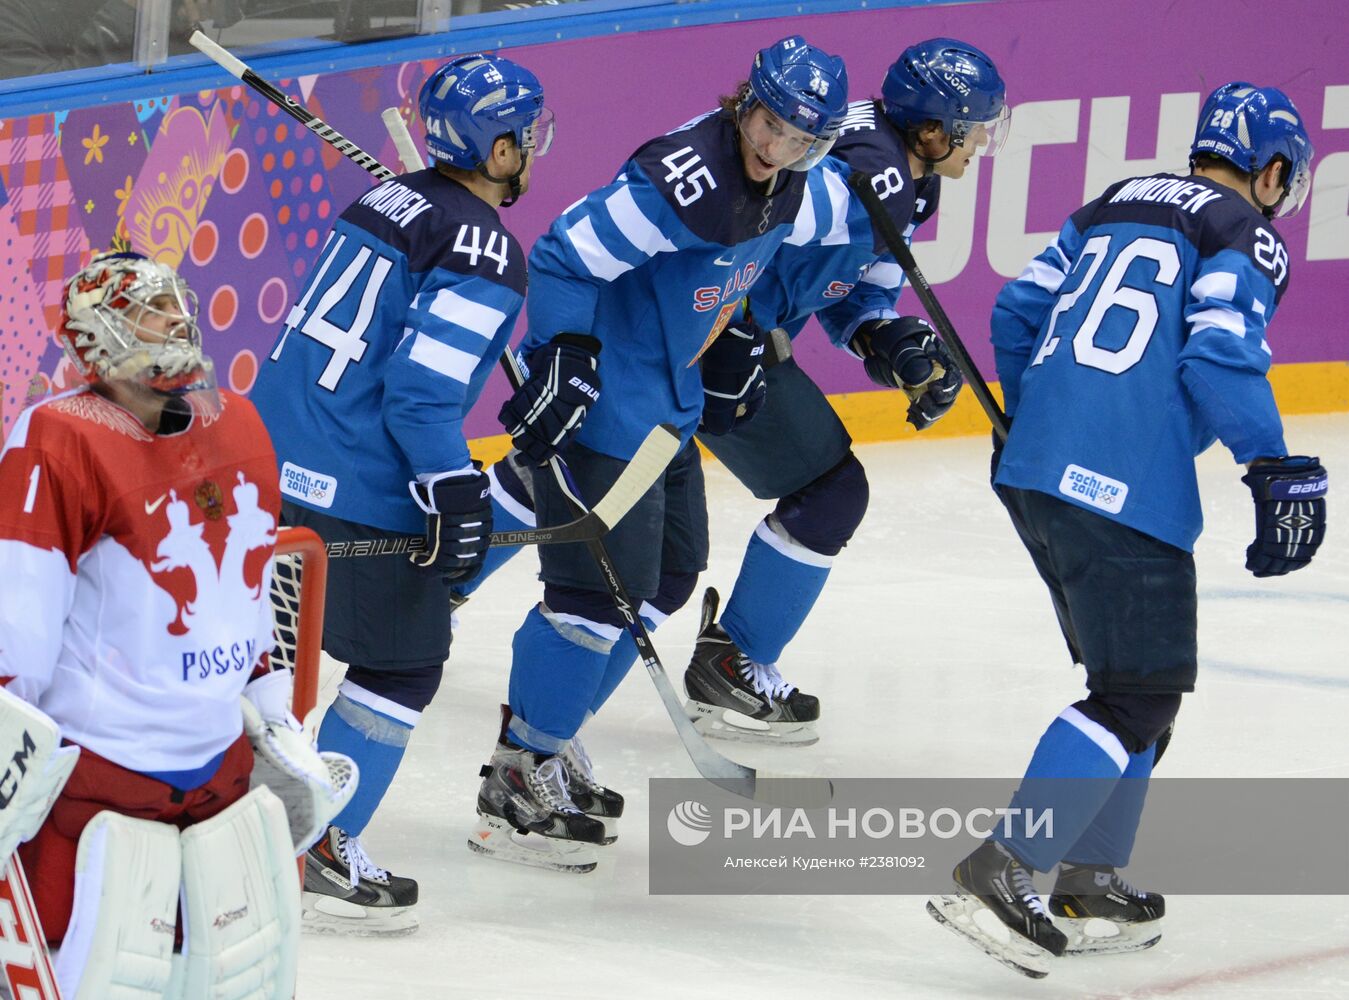 Олимпиада 2014. Хоккей. Мужчины. Финляндия - Россия Олимпиада 2014. Хоккей. Мужчины. Финляндия - Россия